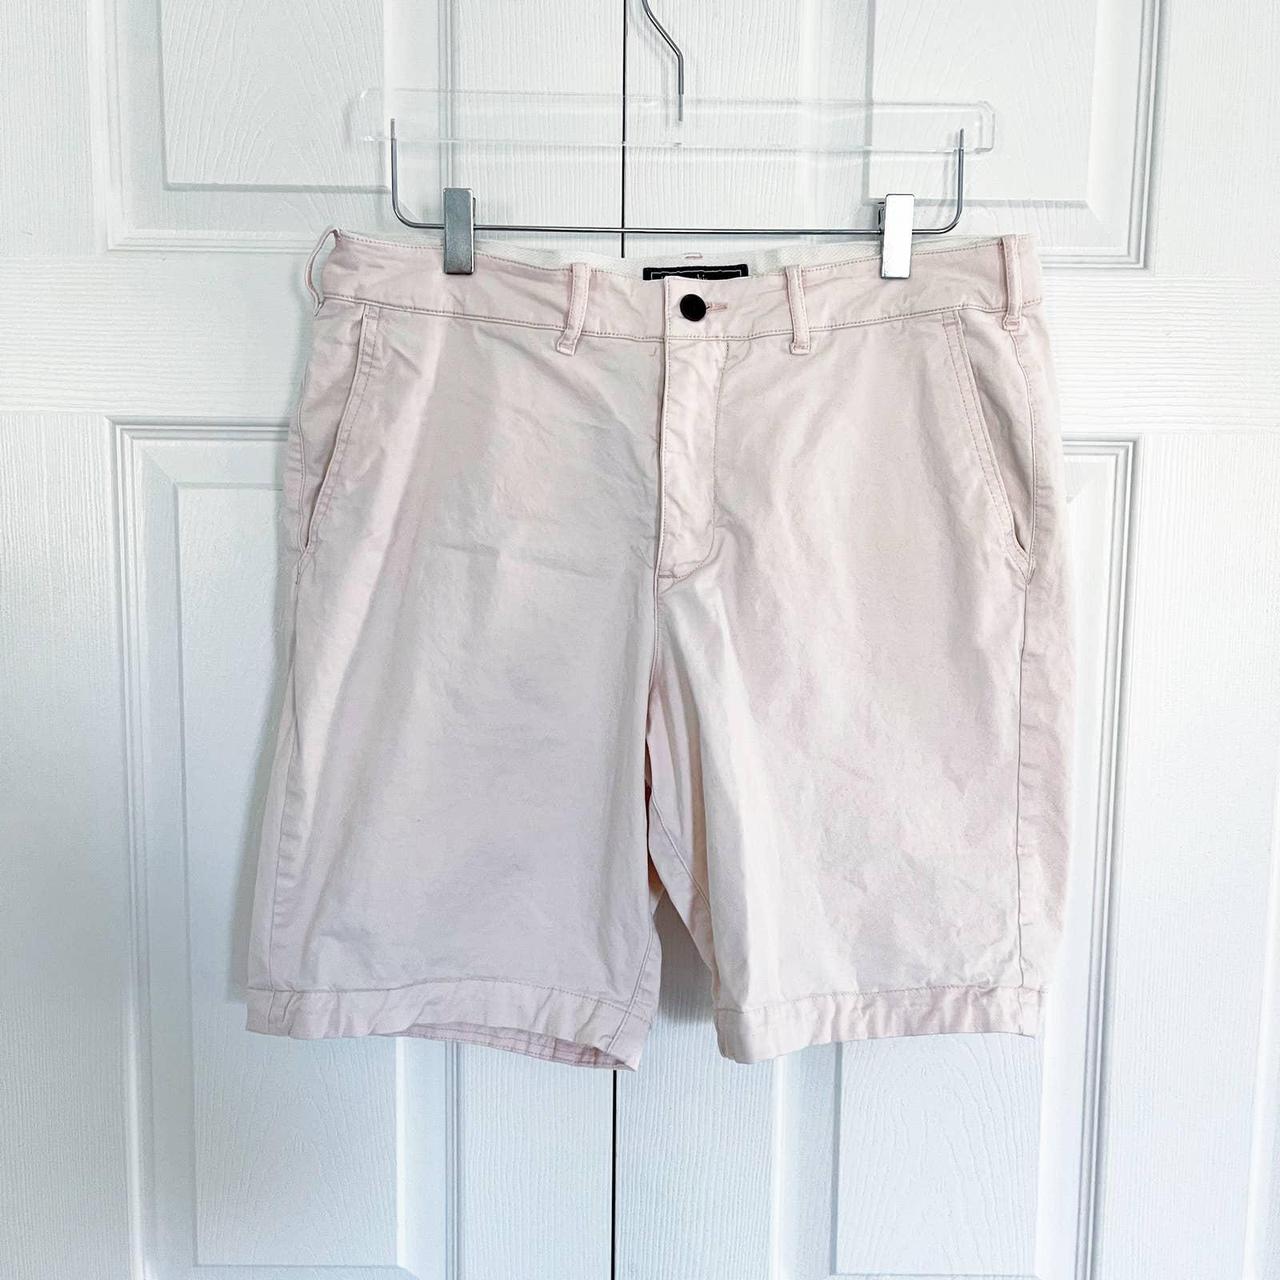 Men's Pink Shorts: Chino & Linen Shorts